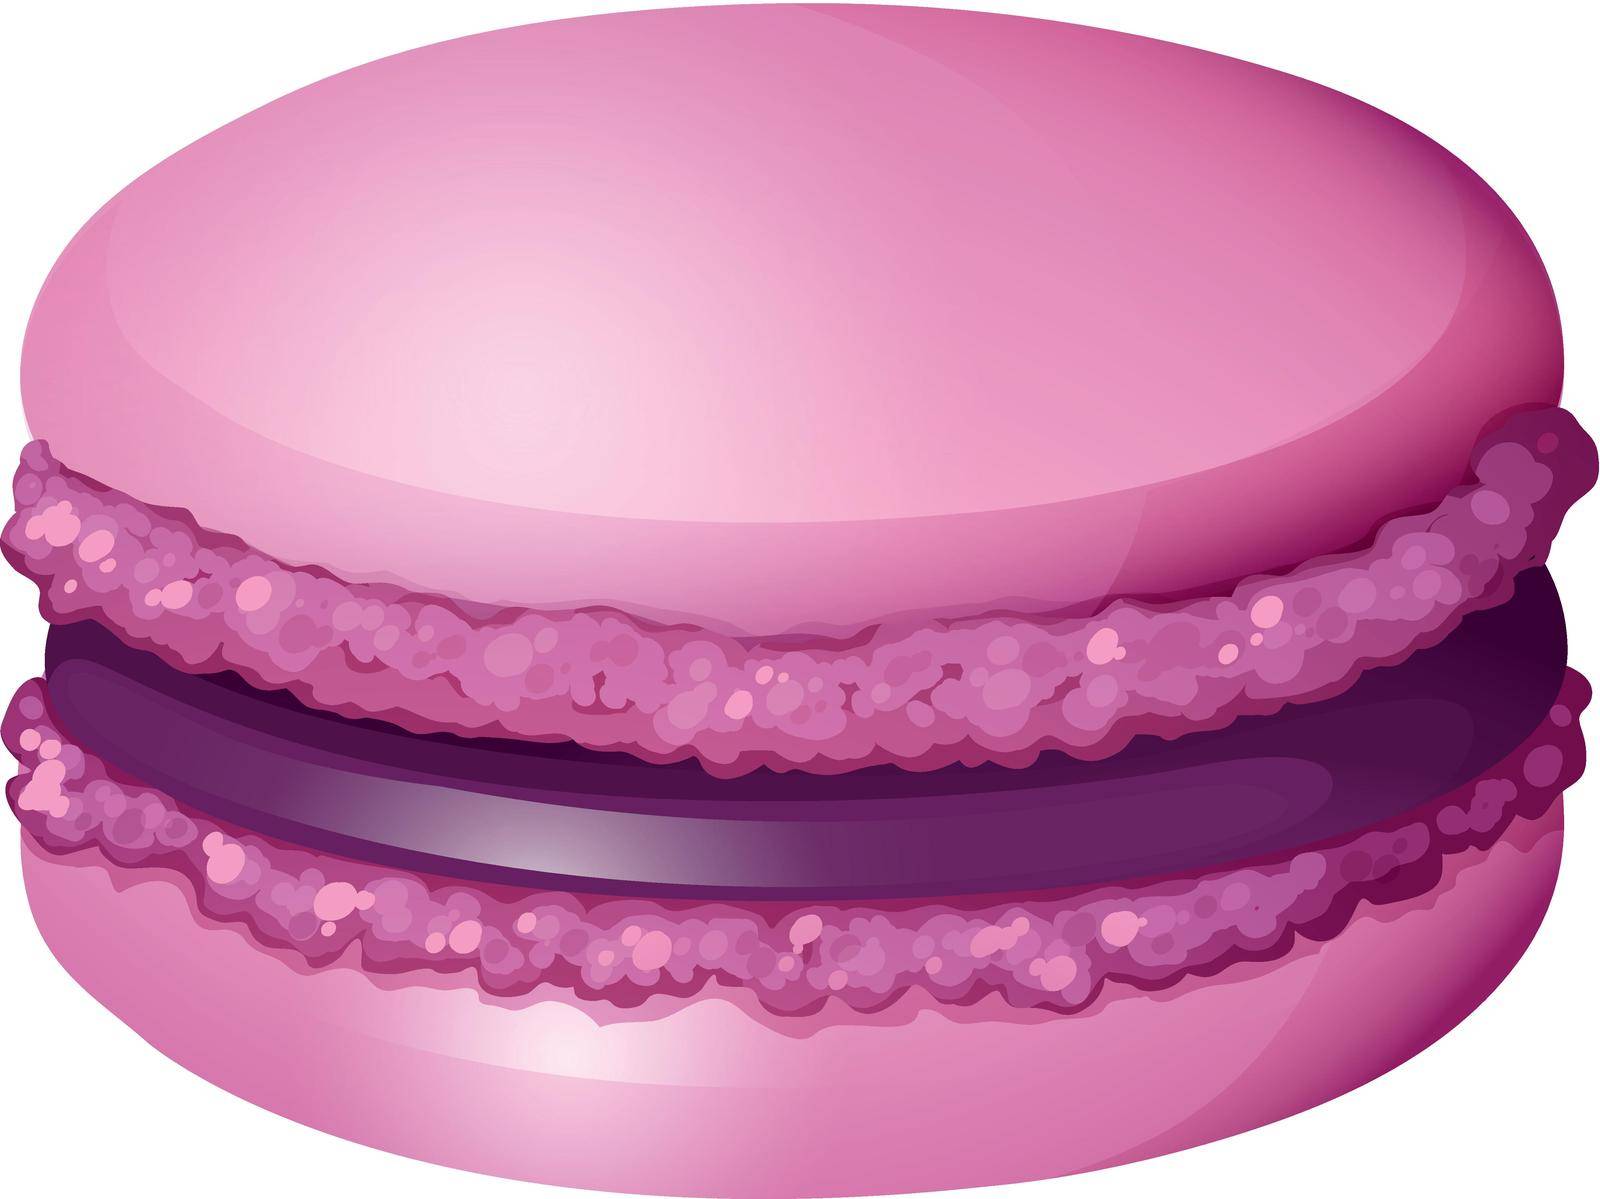 Purple color macaron alone illustration